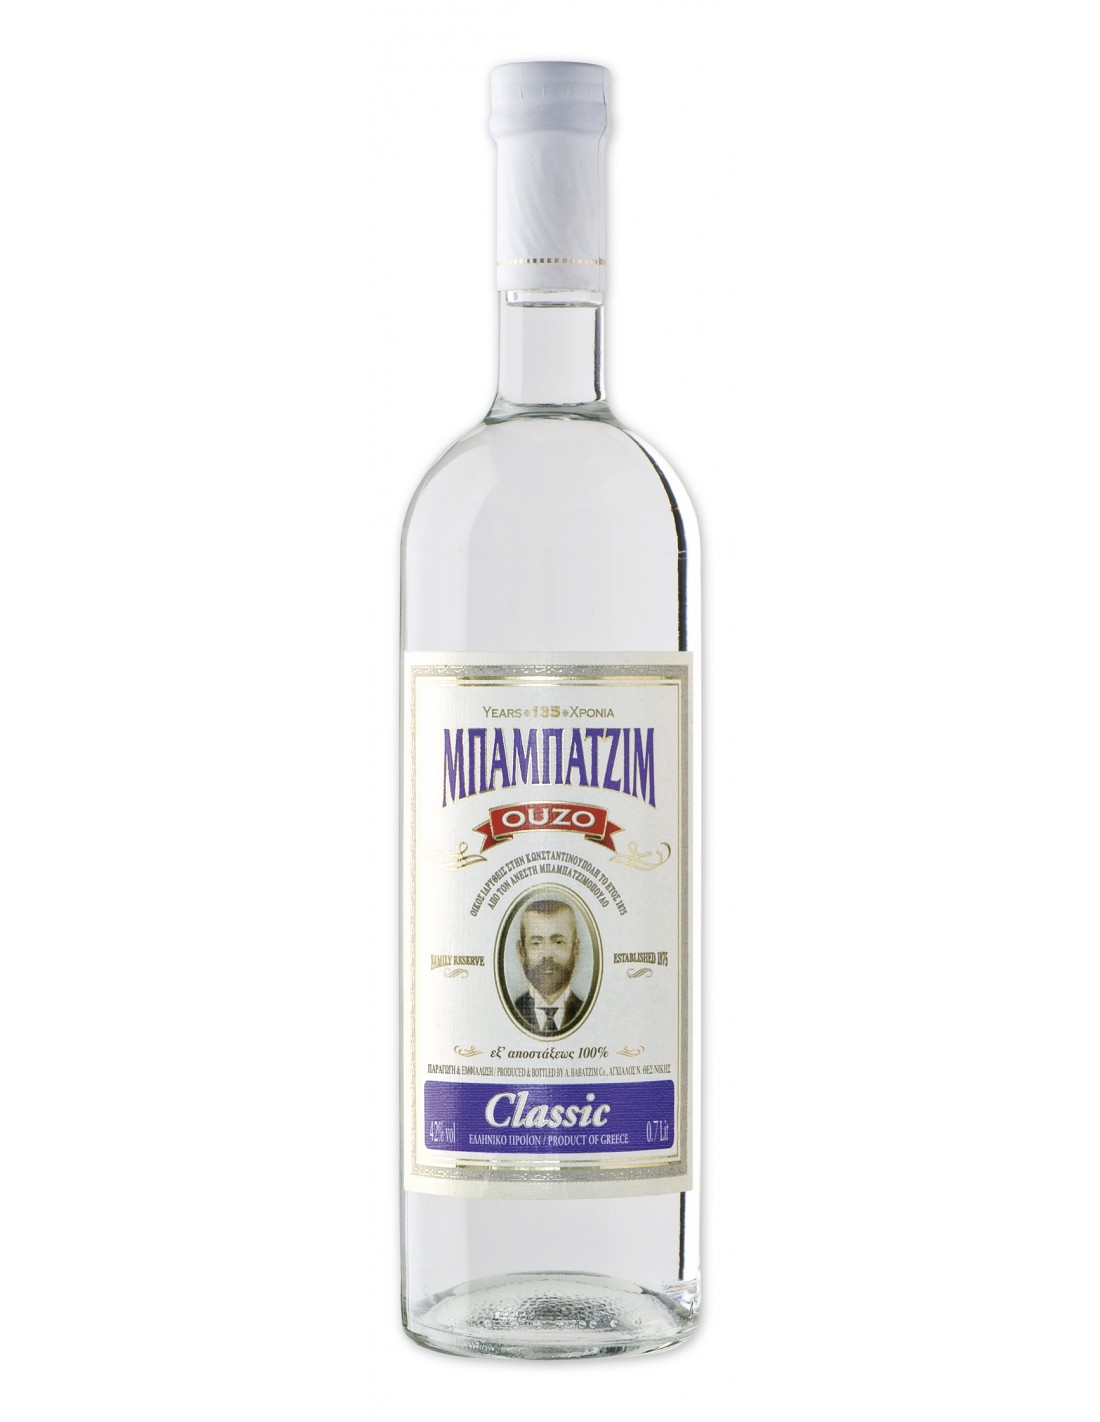 Bautura traditionala Ouzo Babatzim Classic, 42% alc., 0.7L, Grecia alcooldiscount.ro